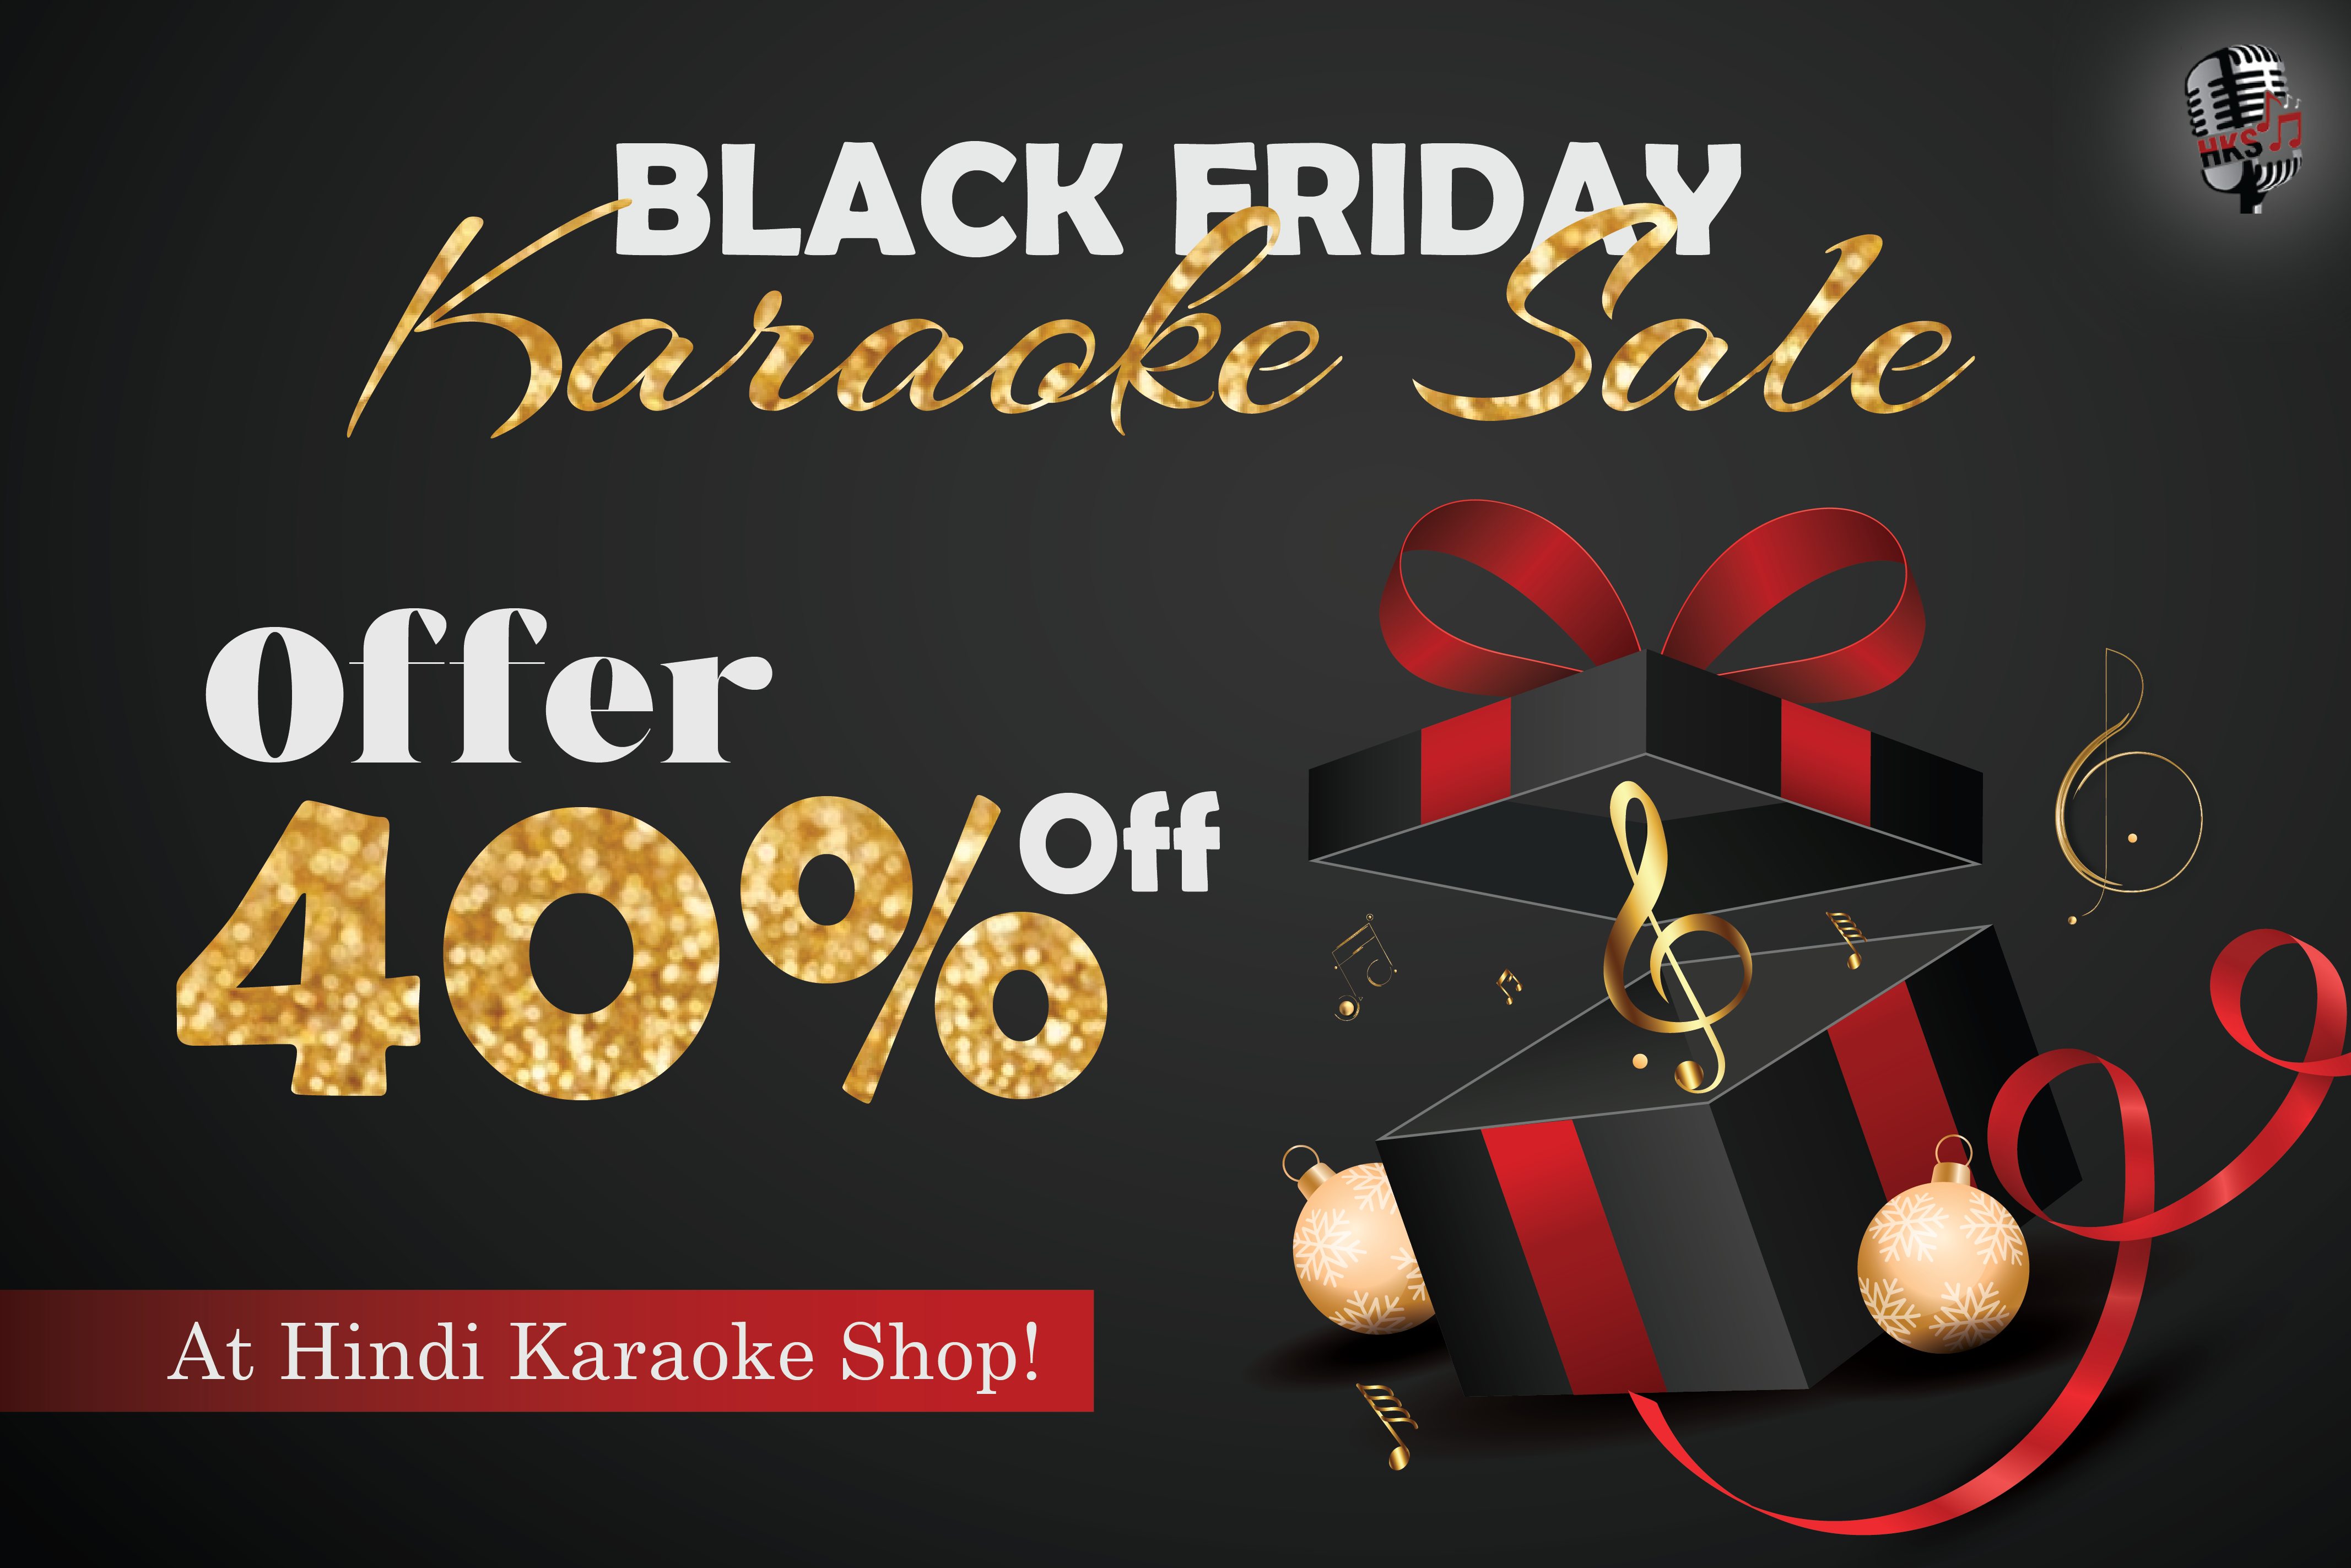 Sing Along with Black Friday Savings: 40% Off on Karaoke Tracks!